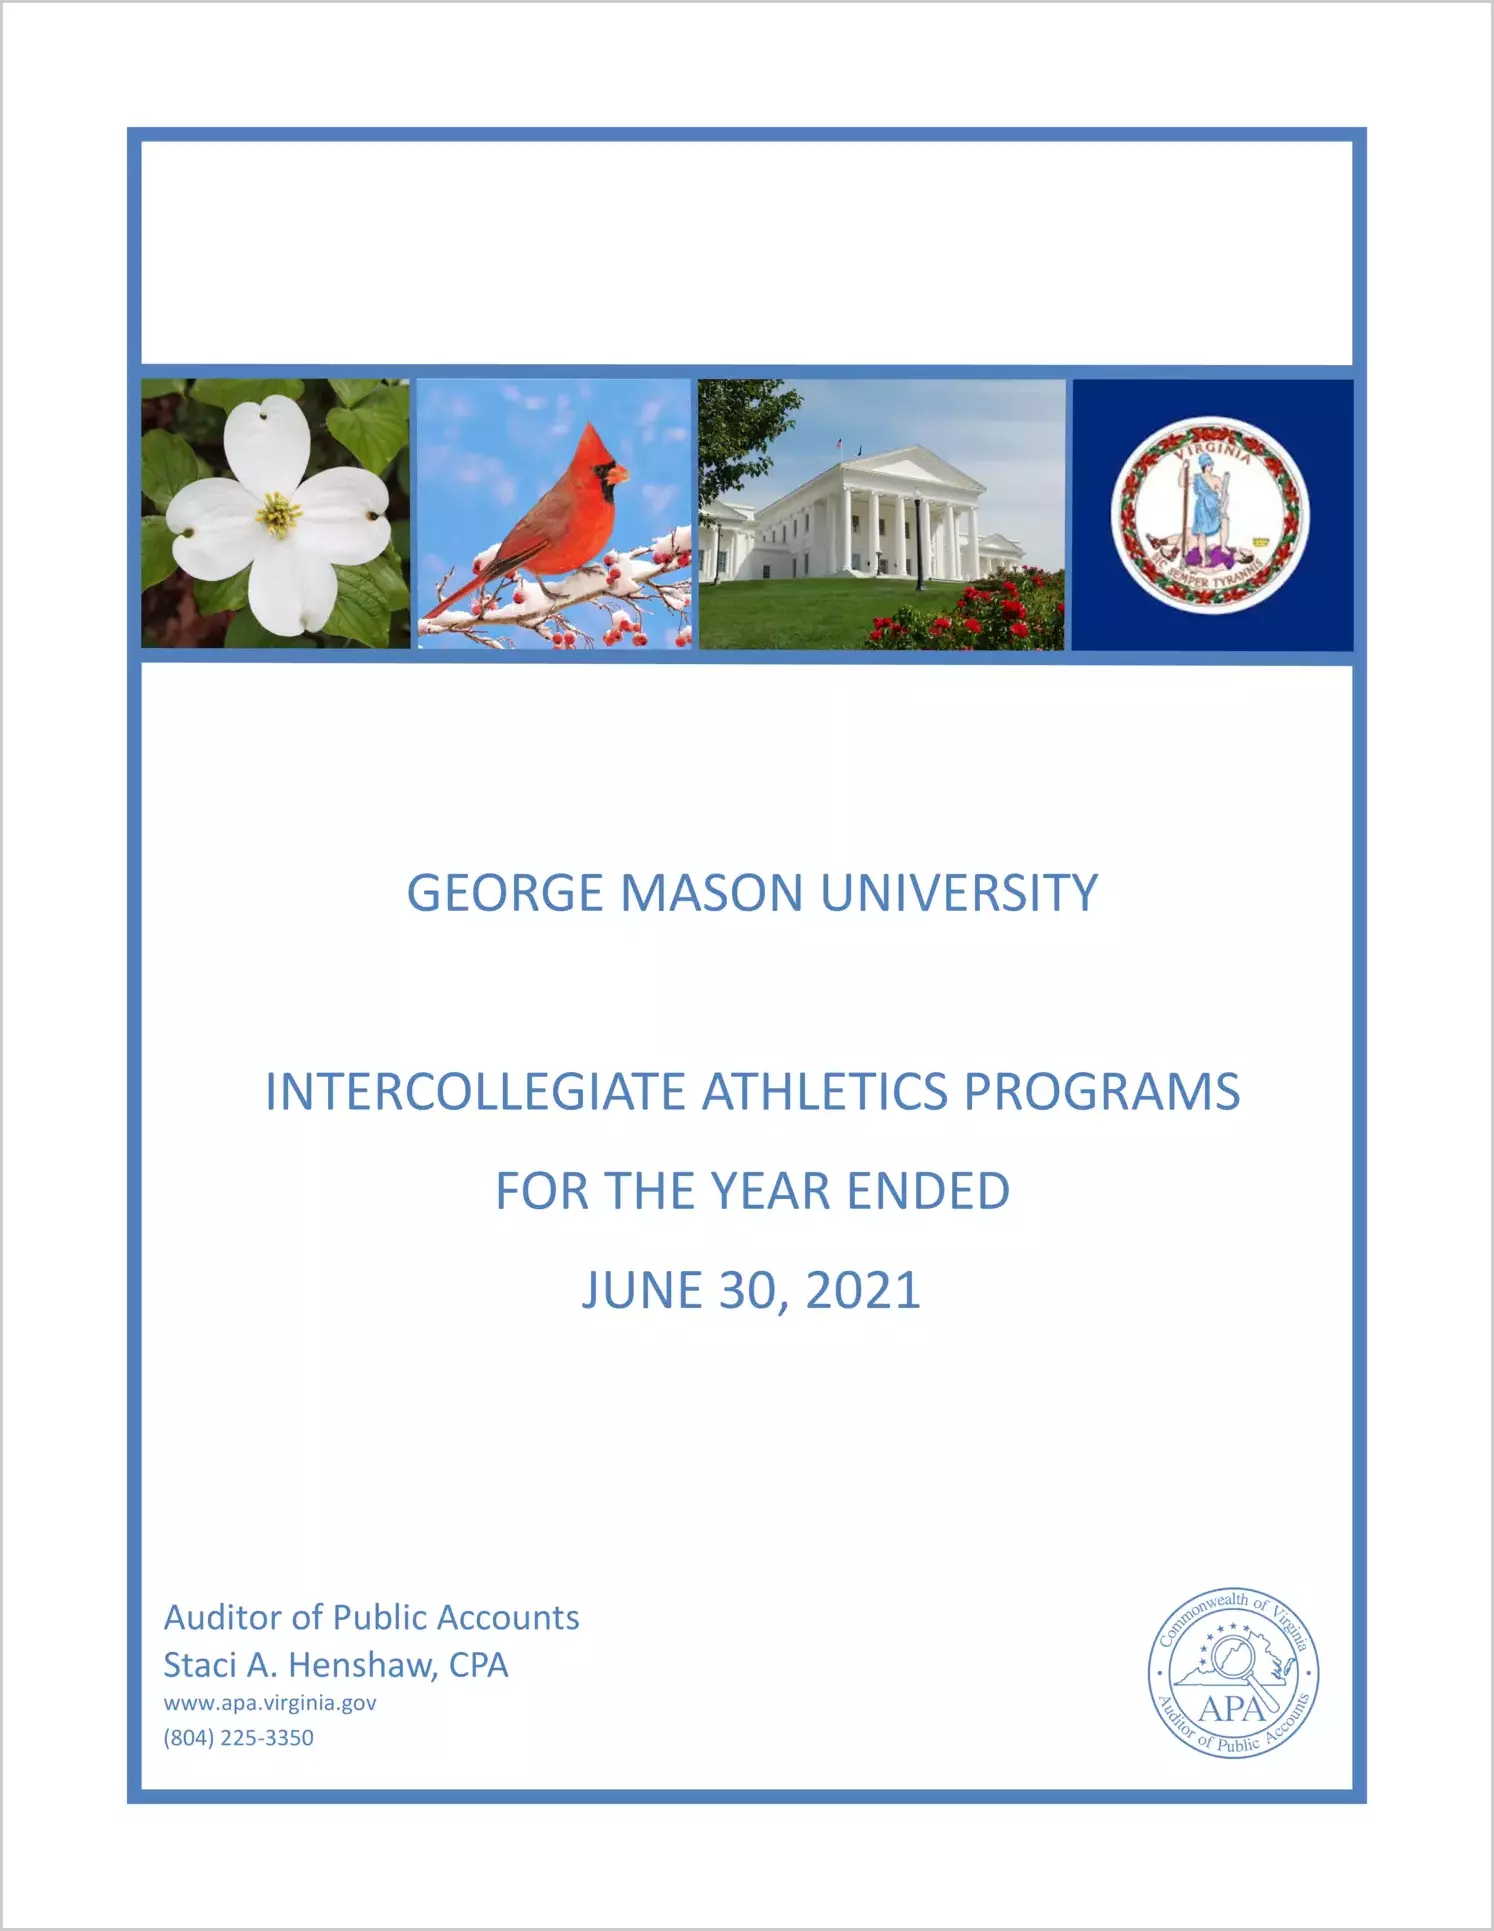 George Mason University Intercollegiate Athletics Programs for the year ended June 30, 2021